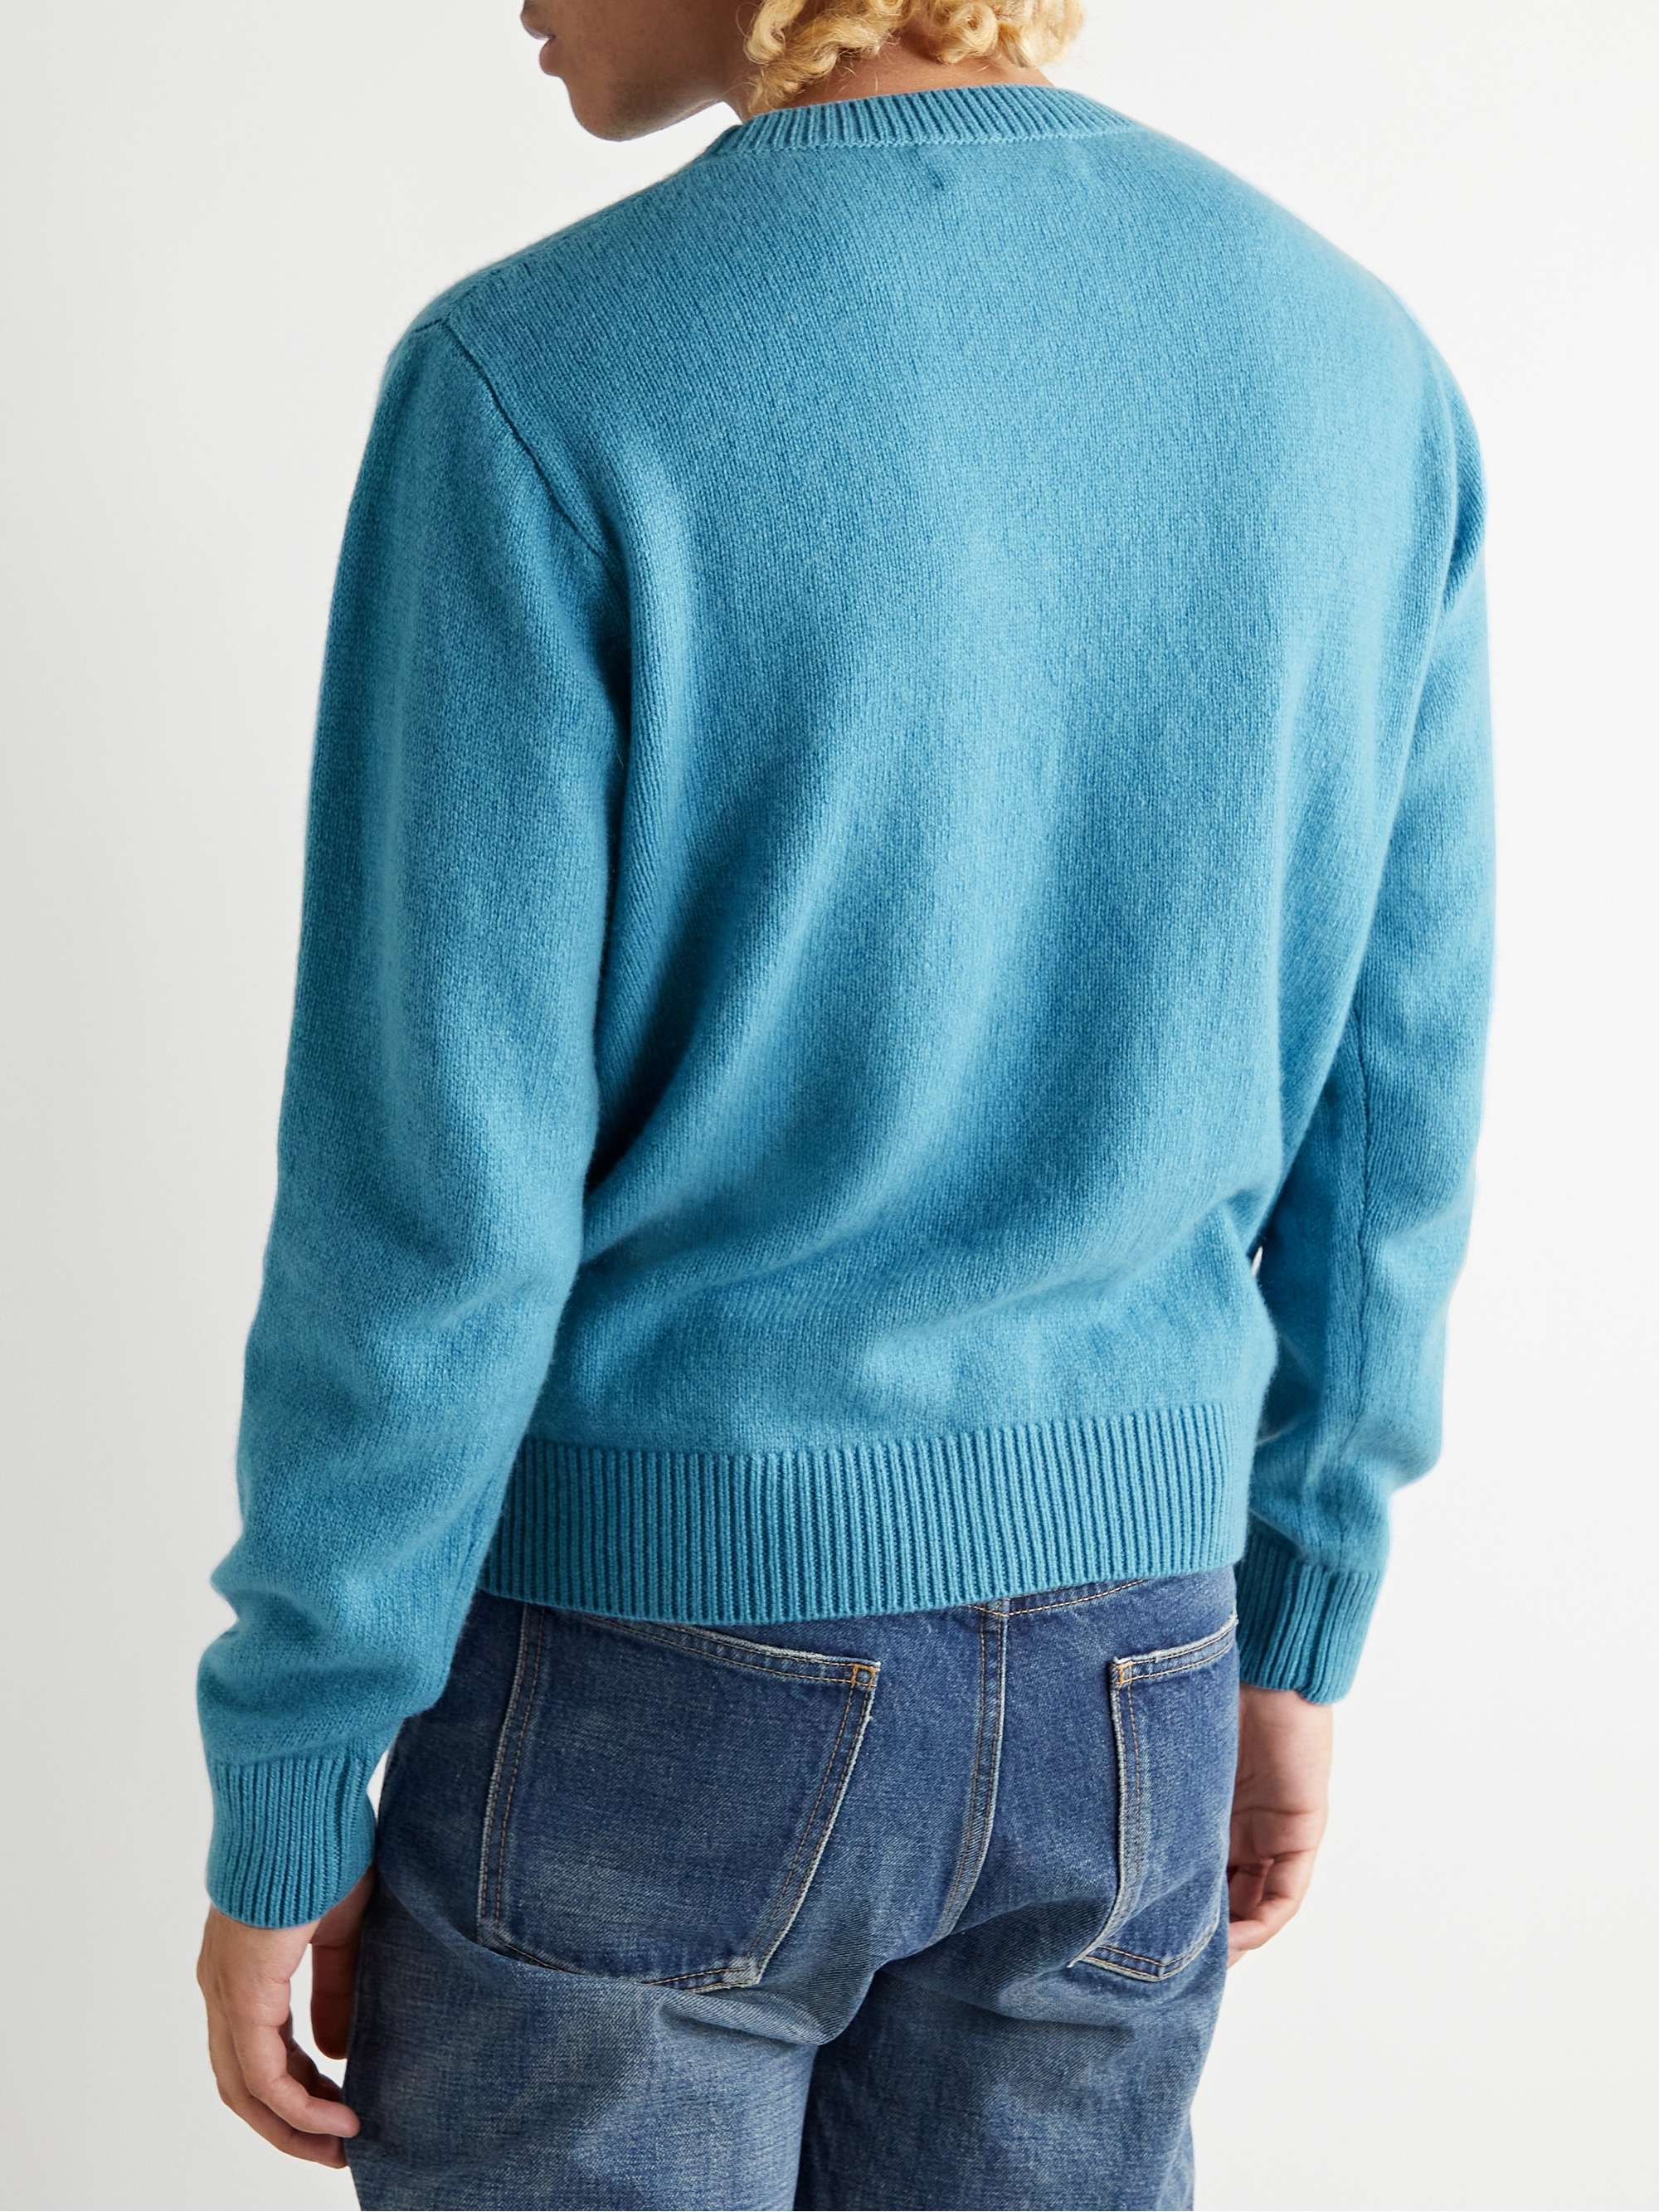 THE ELDER STATESMAN Cashmere Sweater